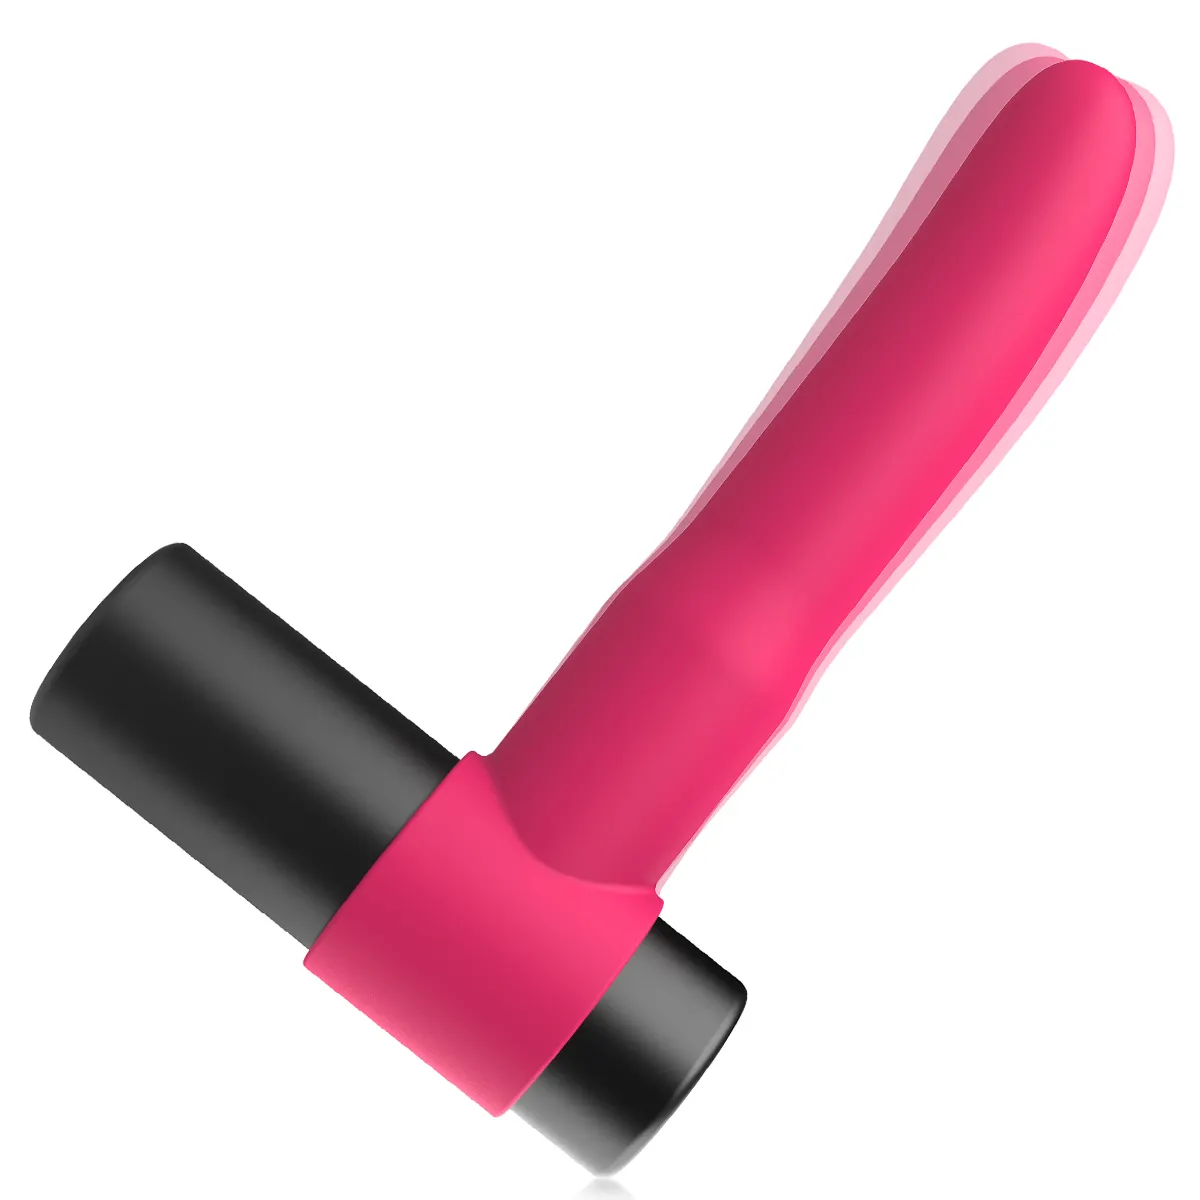 Sexo fuerte vibración Messager punto G para mujeres Fascia masaje de cuerpo completo Adultos 18 + vibrador juguetes sexuales para parejas fabricante